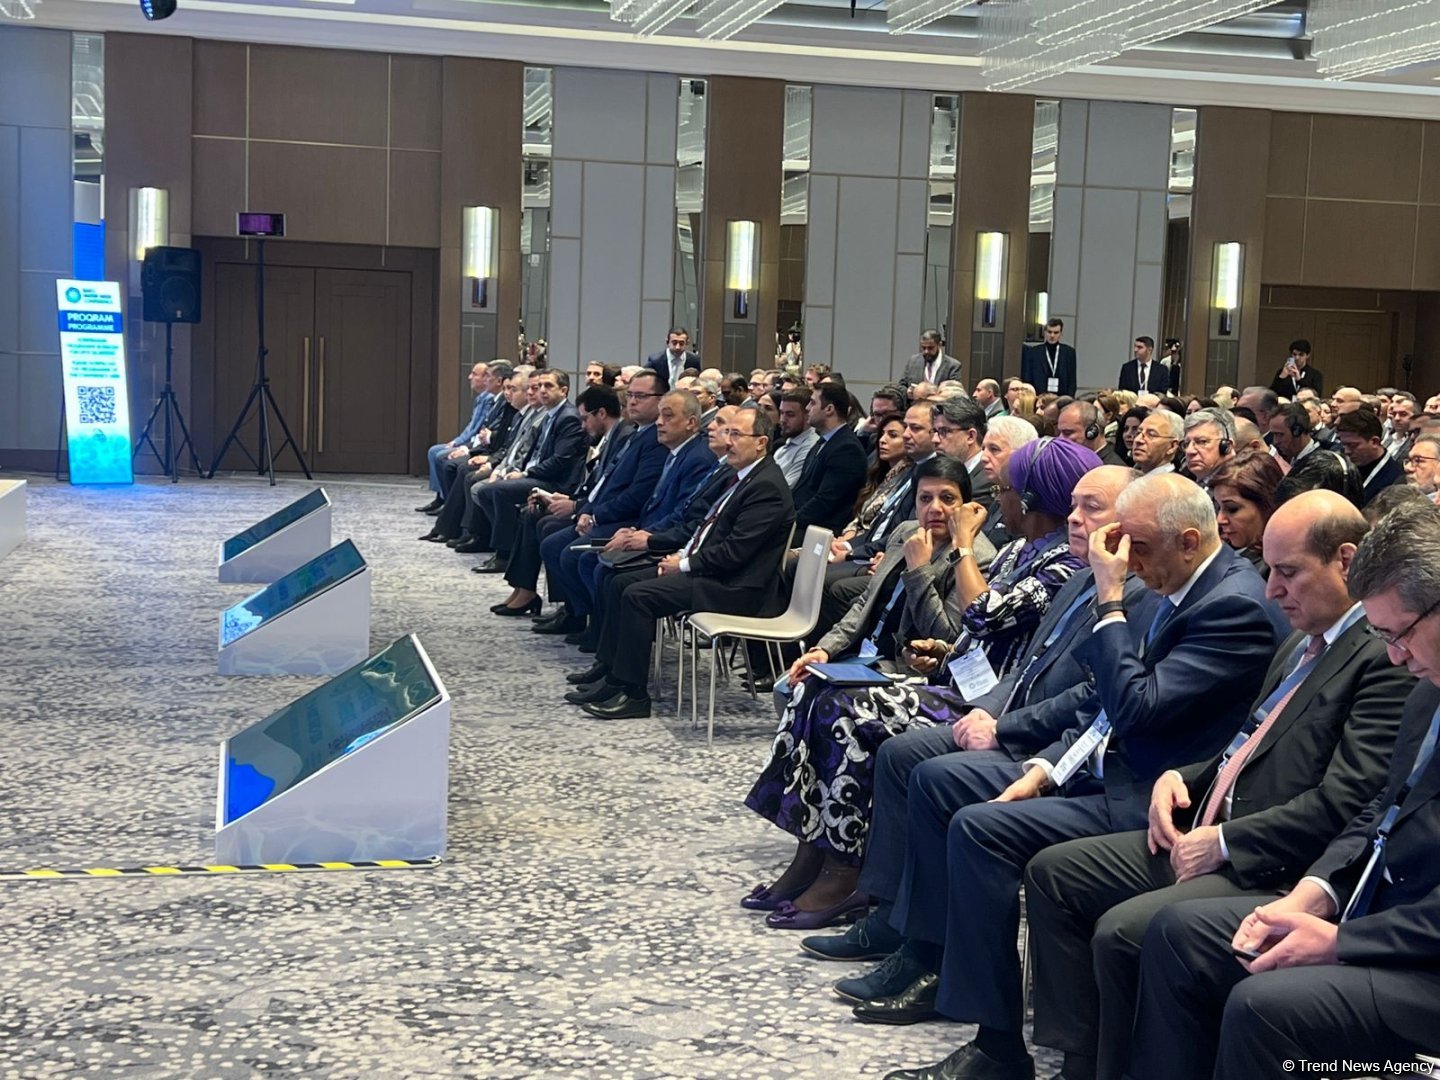 В Баку прошла конференция в рамках "Baku Water Week" (ФОТО)